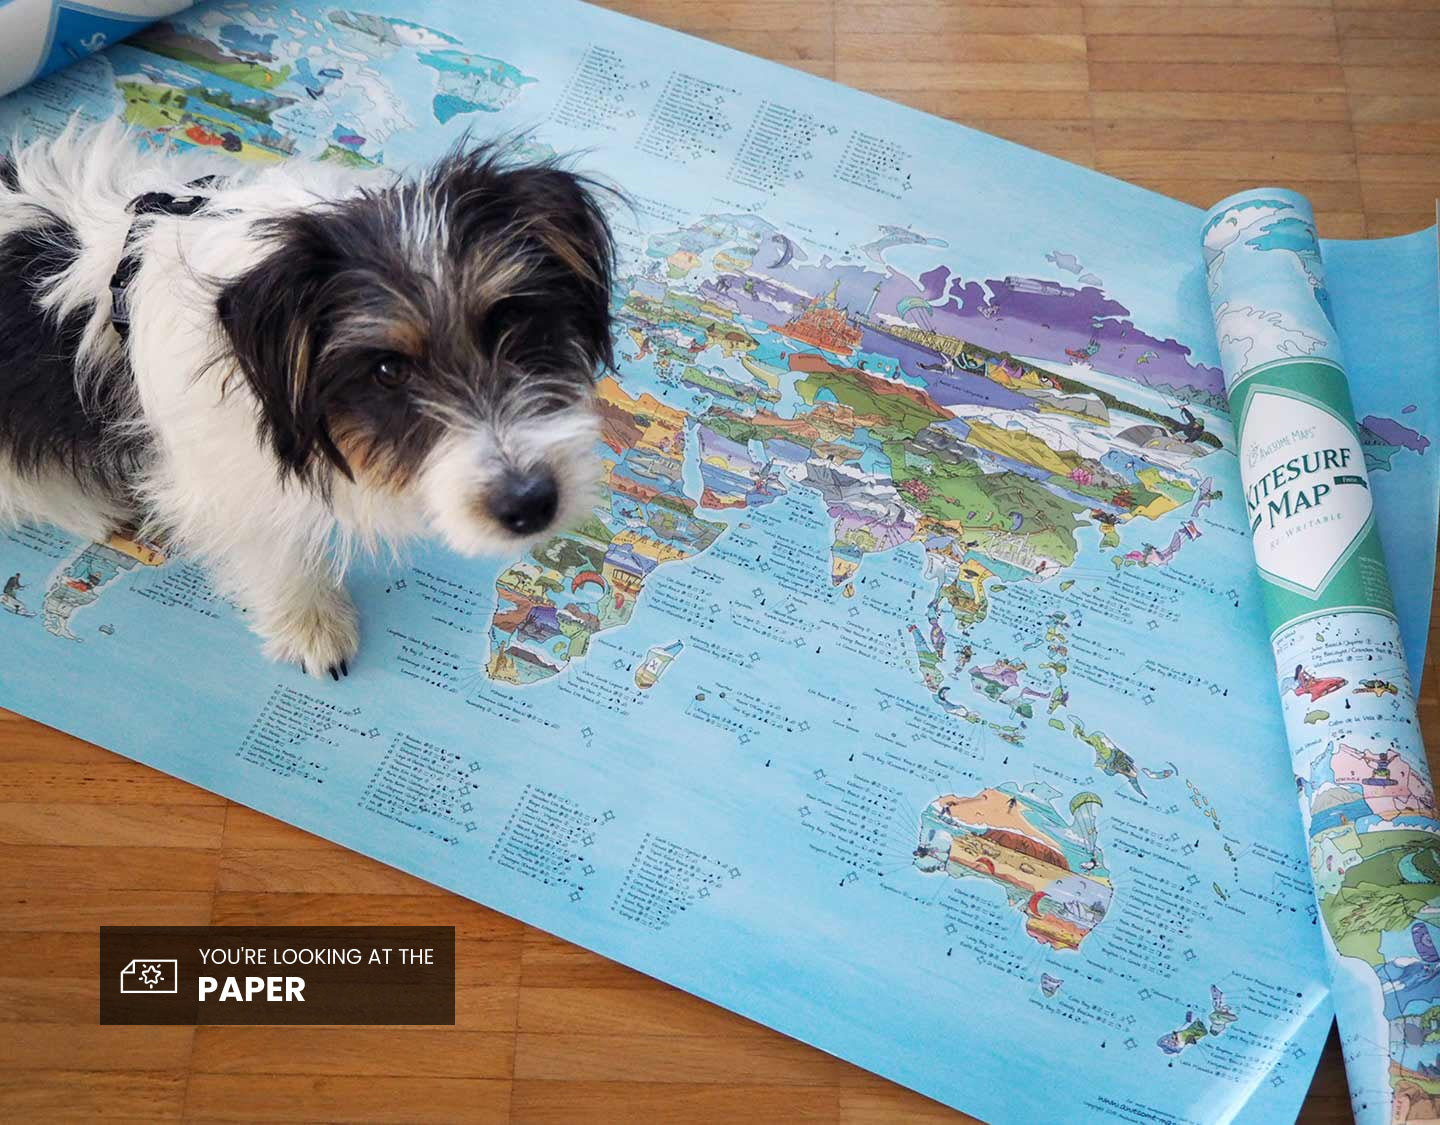 awesome-maps-kite-surf-trip-map-paper-wipeable-planning-kiting-galway-ireland-blacksheepsurfco-dog